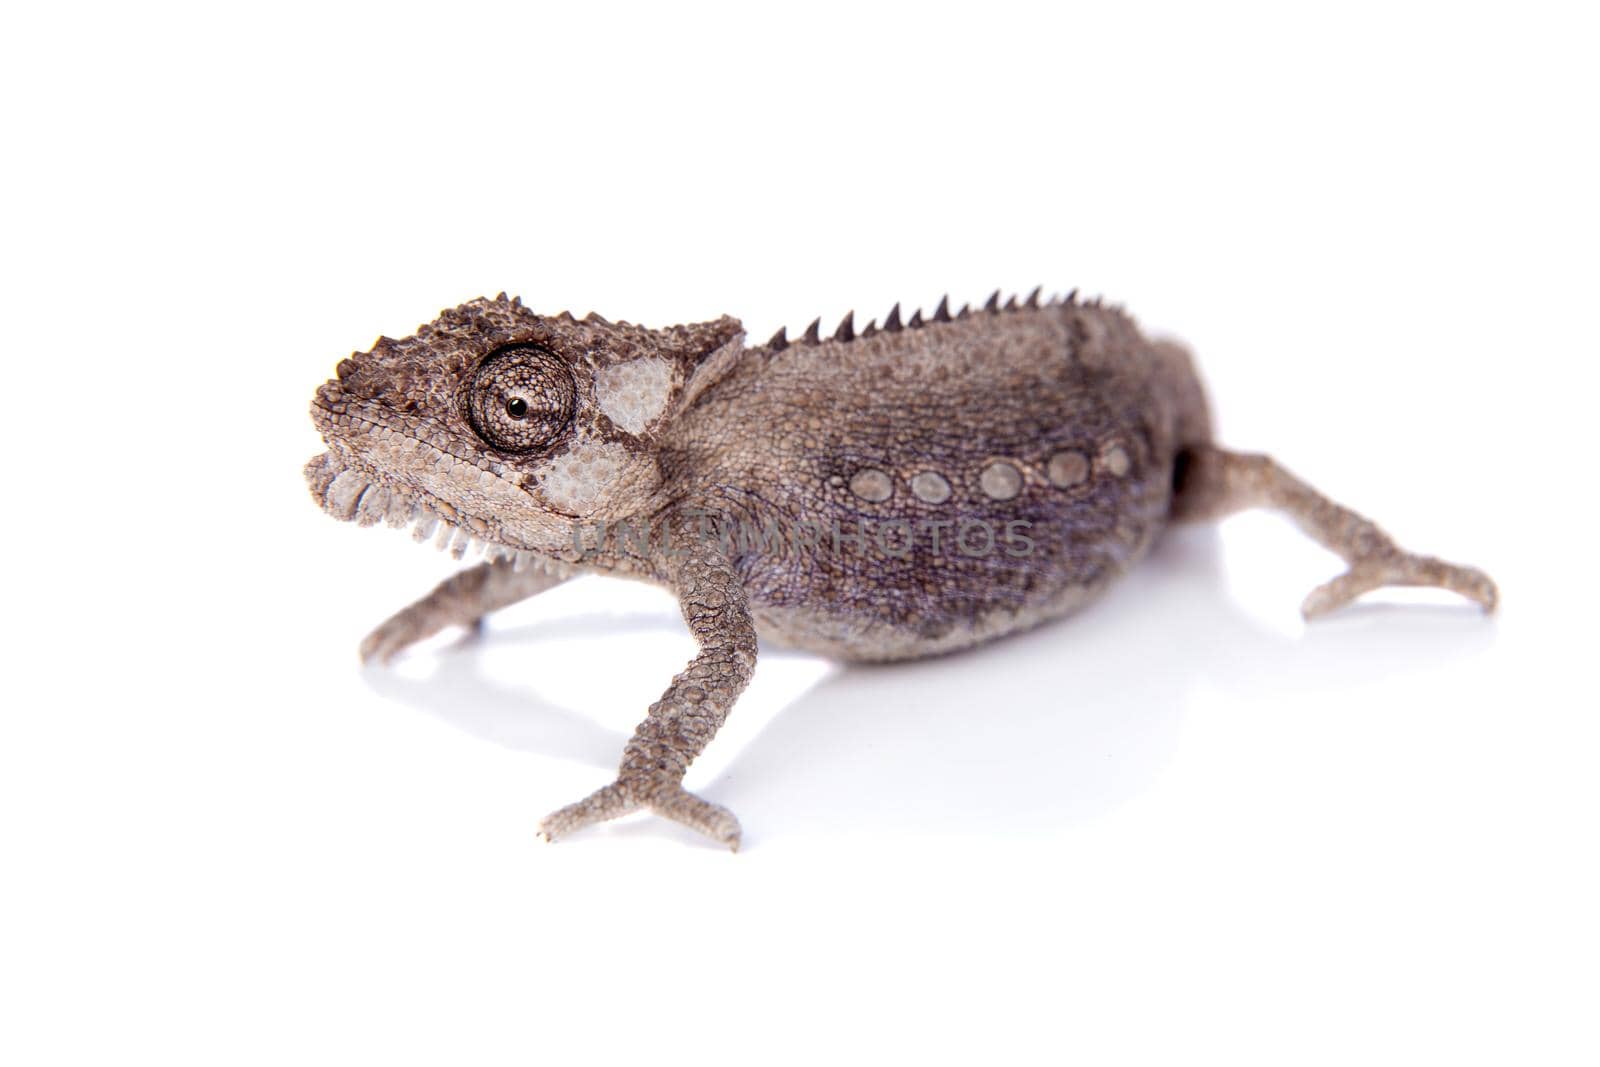 The Namaqua dwarf chameleon or Bradypodion occidentale on white by RosaJay